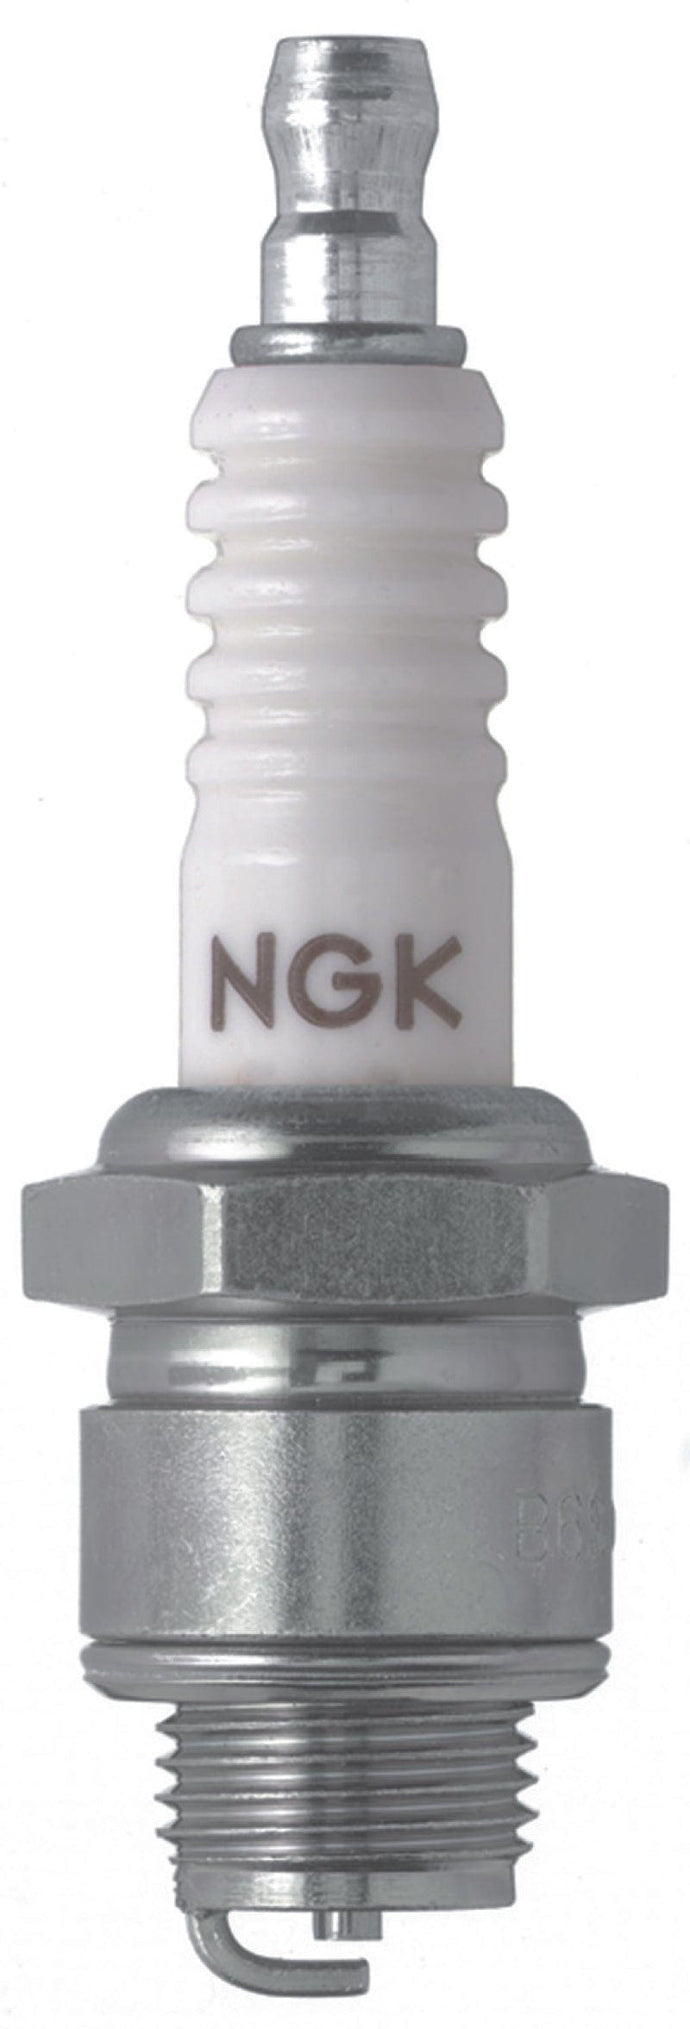 NGK NGK3810